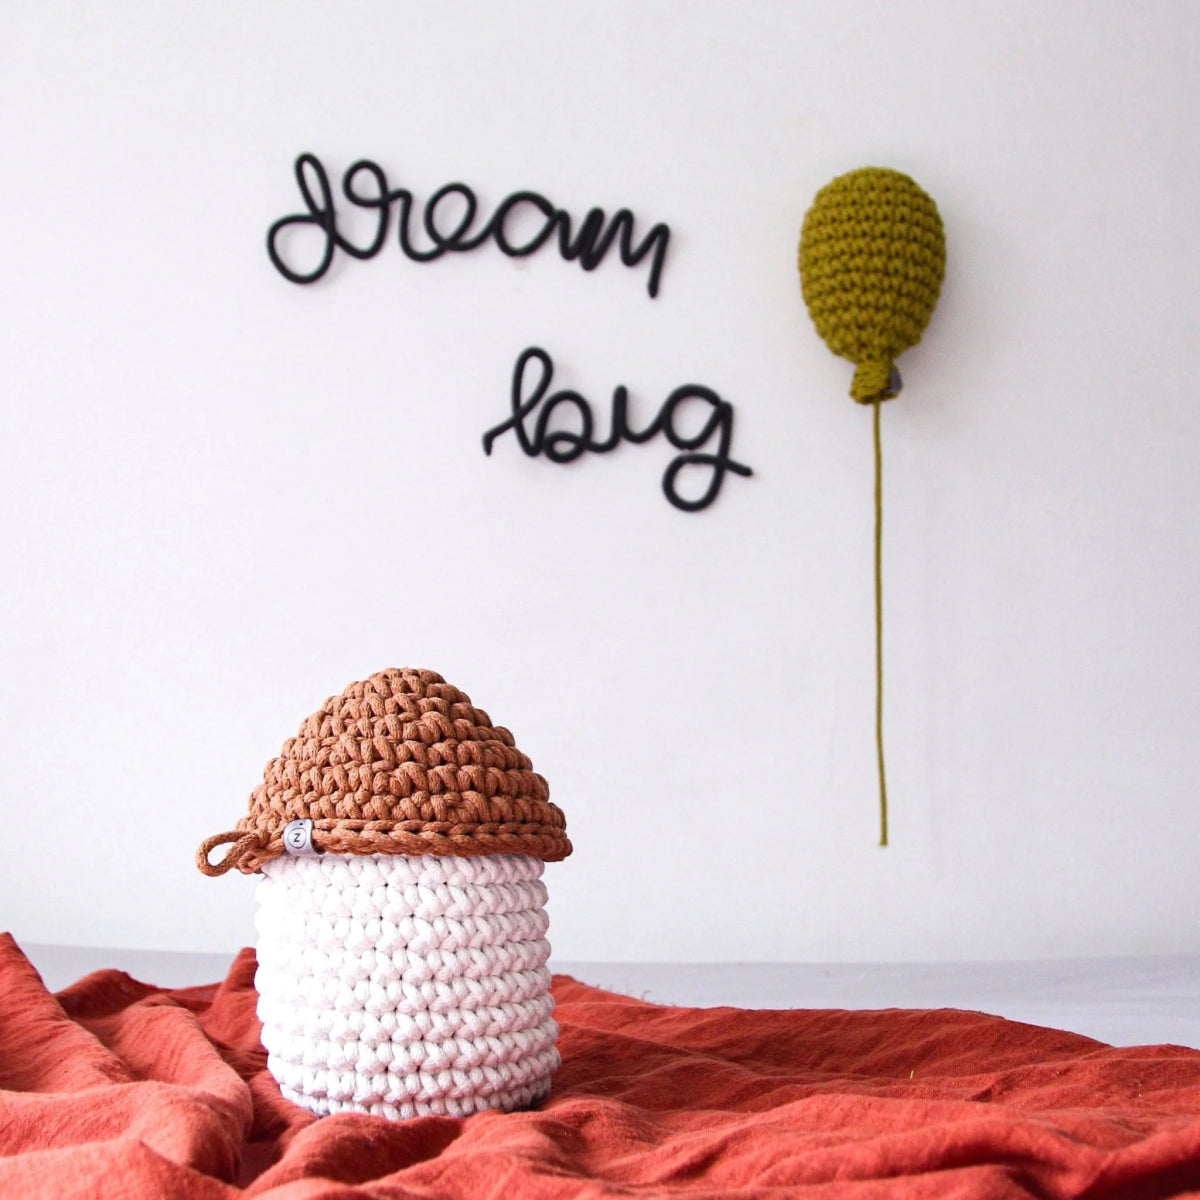 Crochet balloon | GOLD GREEN - Zuri House